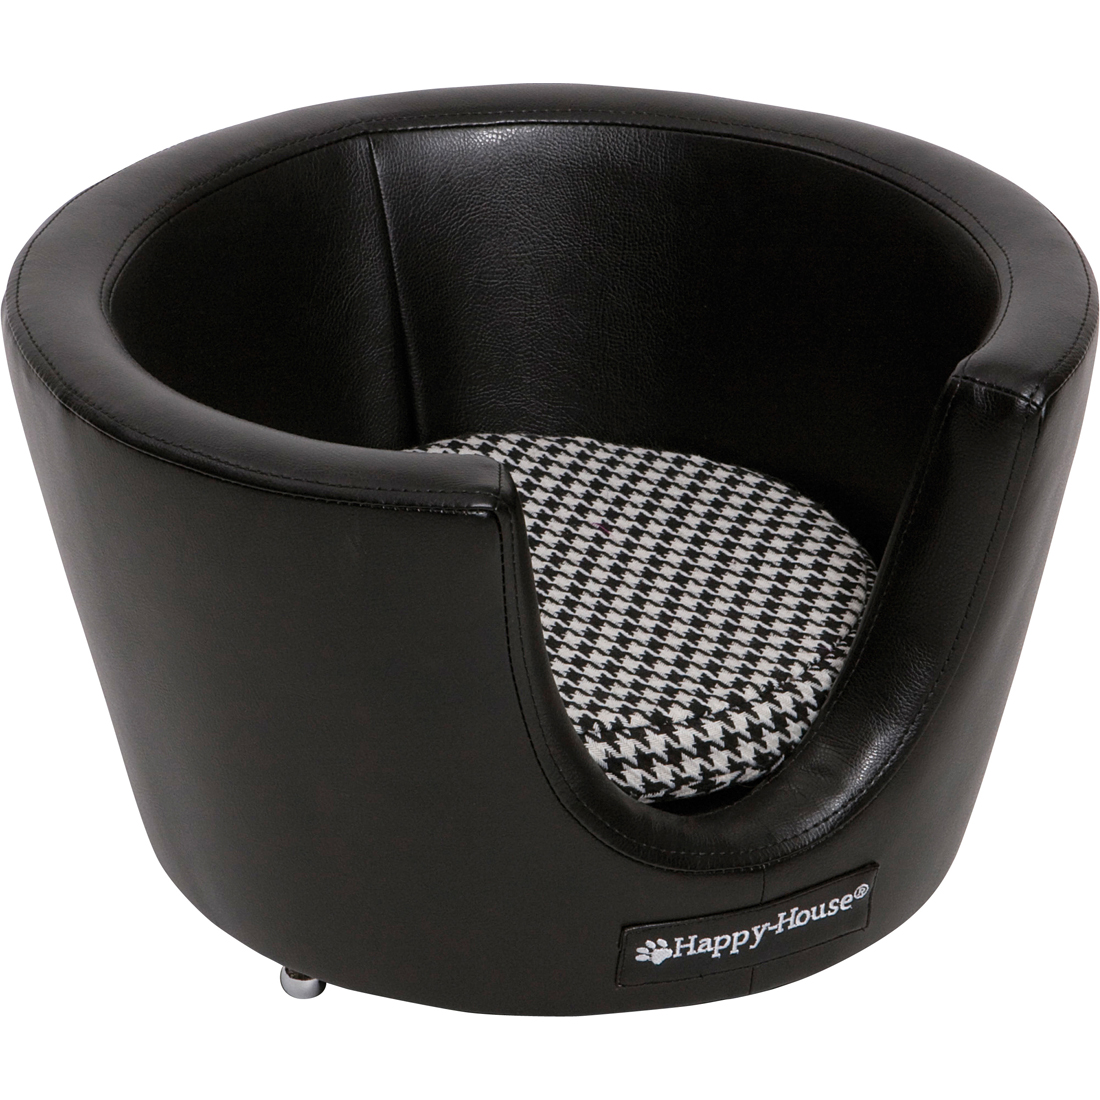 Basket (S) Luxury Leather Black